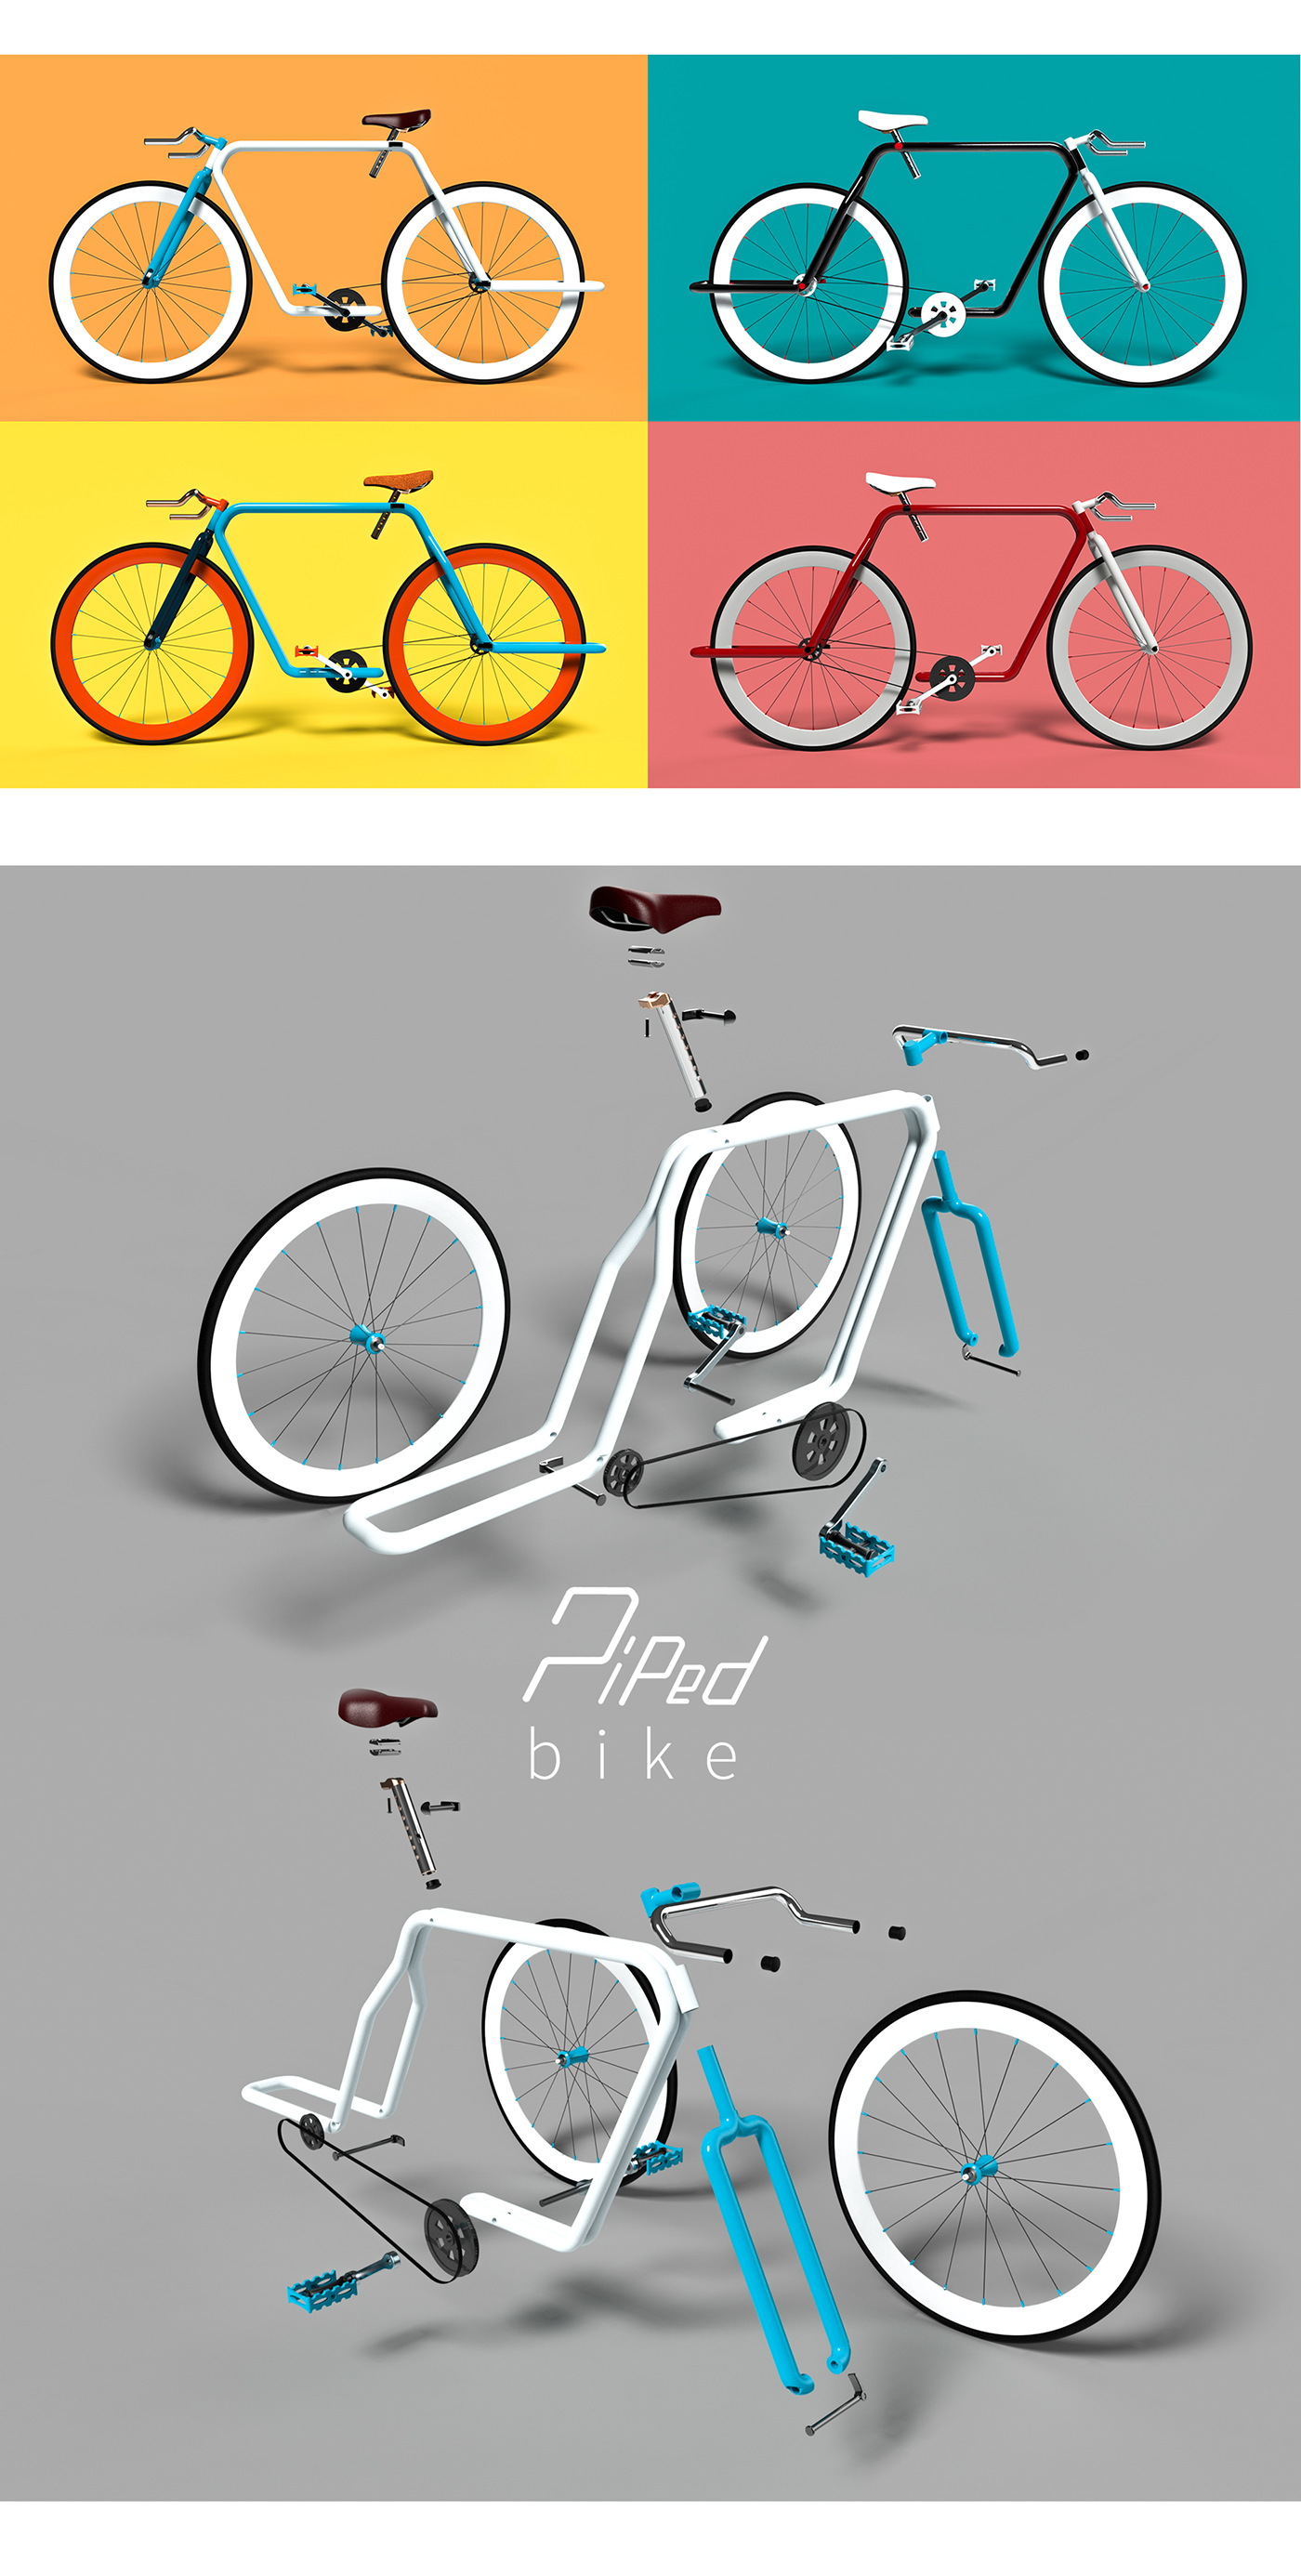 design Bike tube color Bicycle frame utbm wheel bend Piped